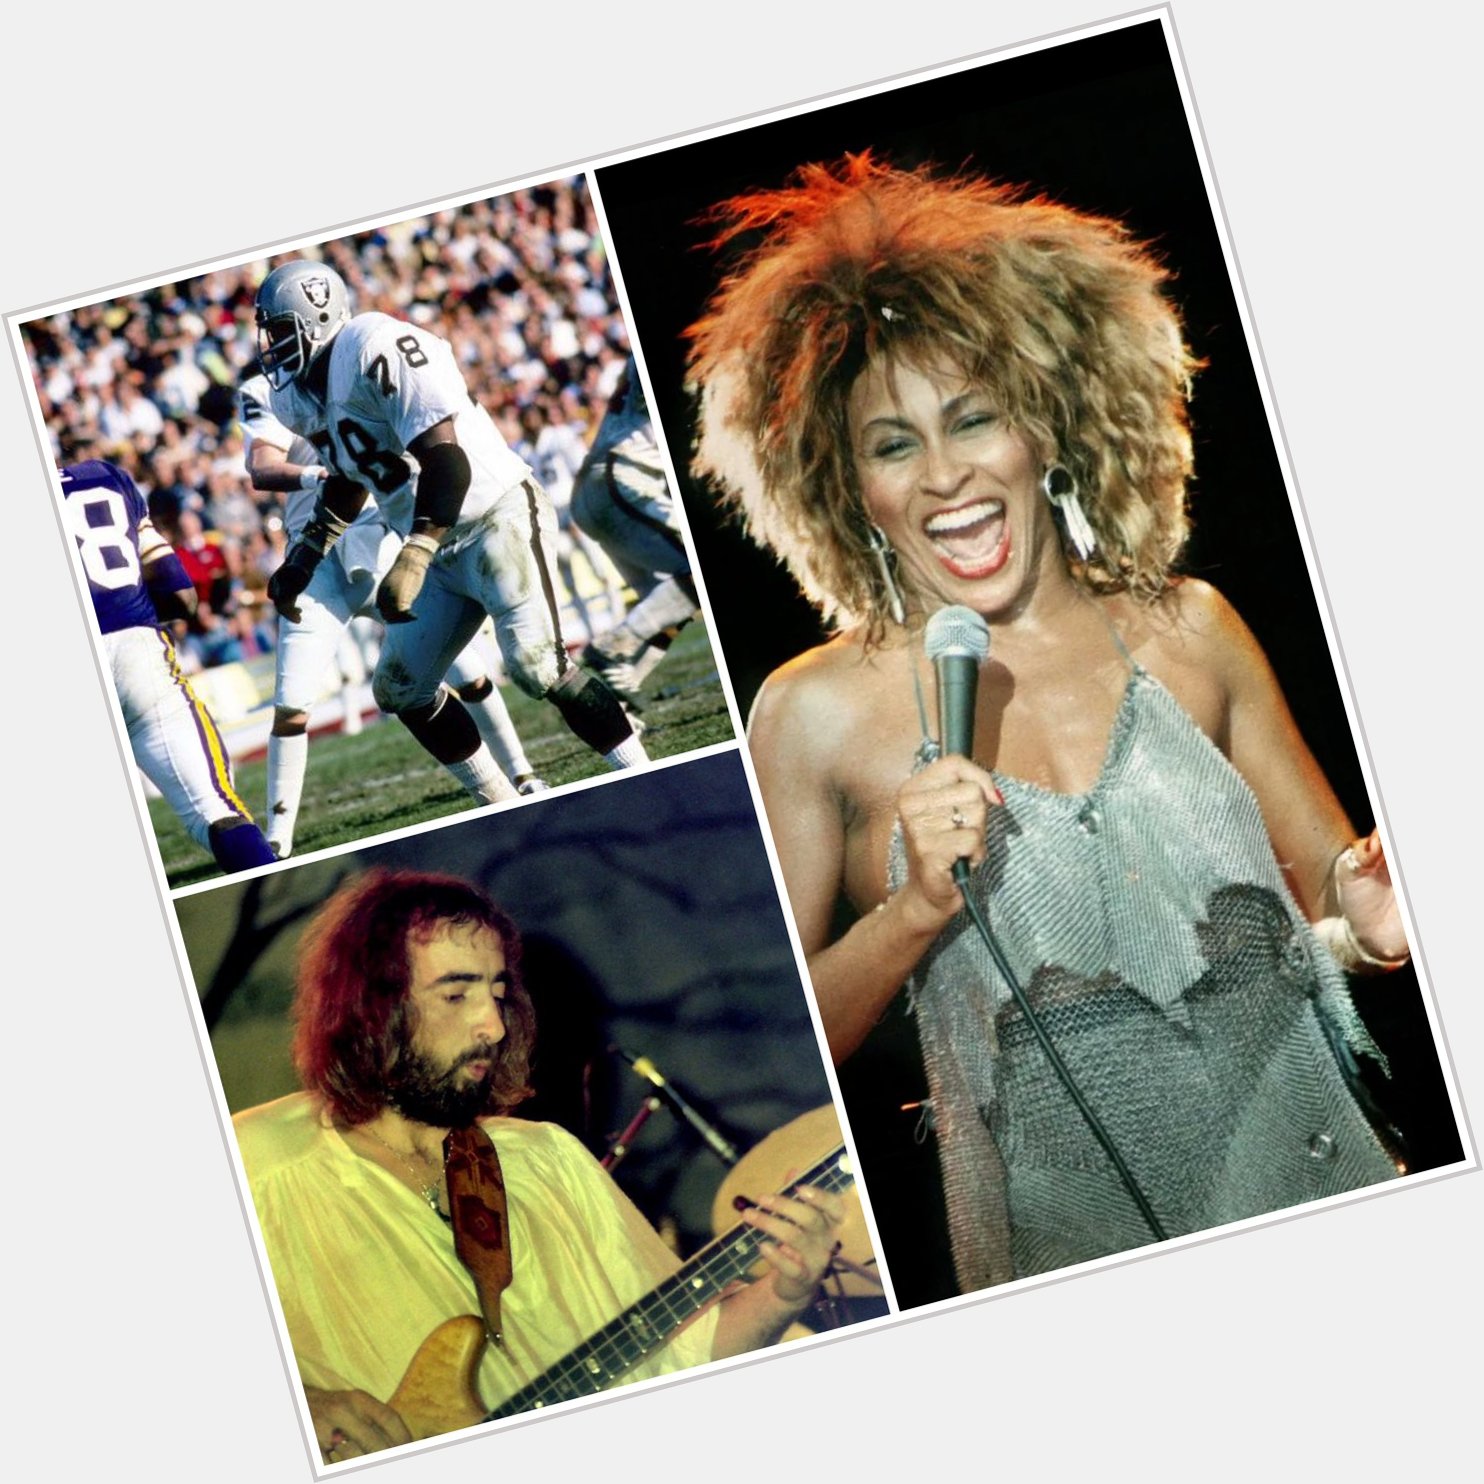 Happy Birthday to 

Tina Turner 
John McVie
Art Shell 